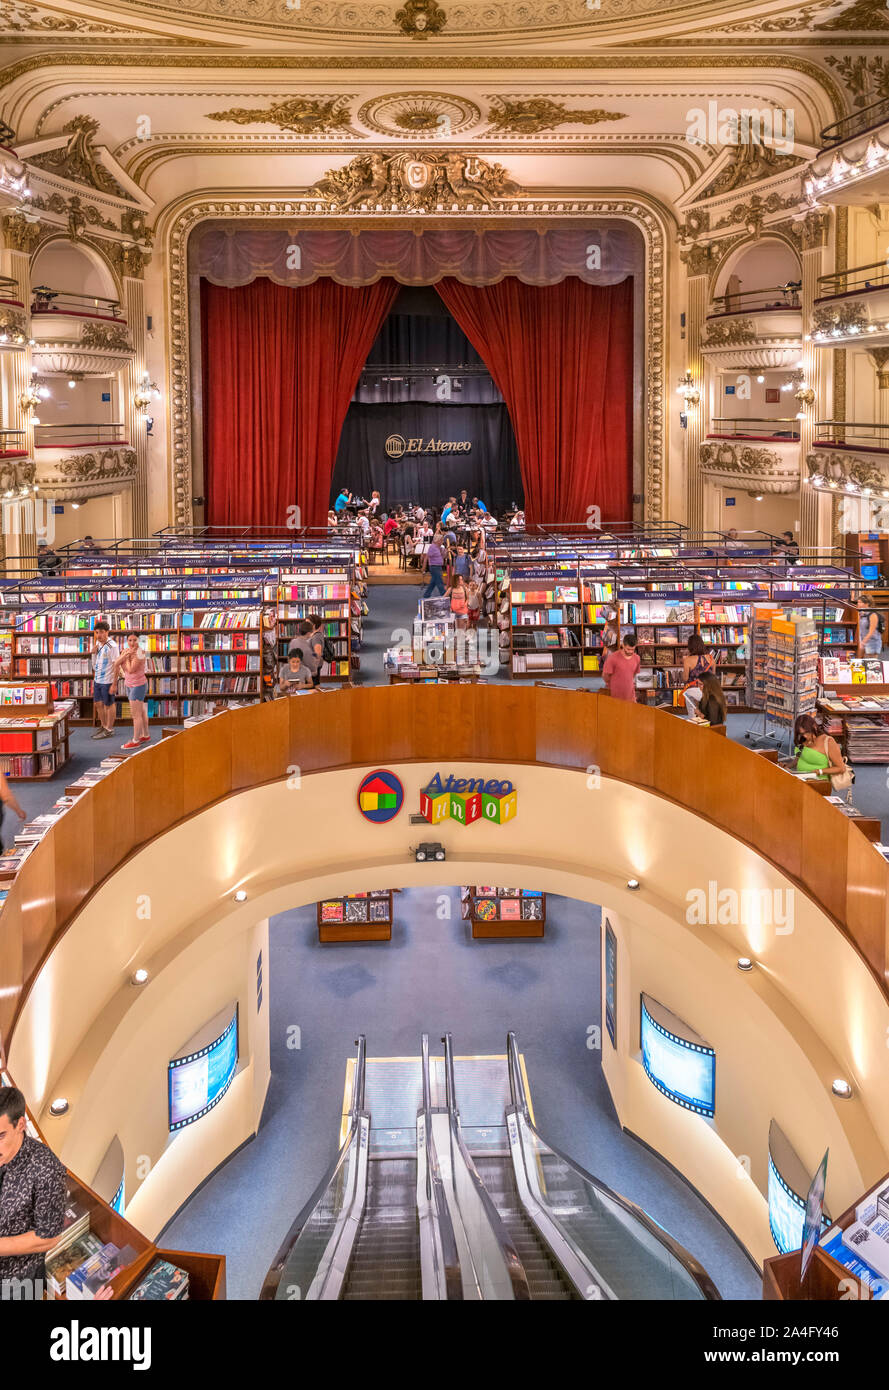 El Ateneo bookshop, Buenos Aires. Interior of the Ateneo Grand Splendid bookstore, a former theatre on Avenida Santa Fe, Buenos Aires, Argentina Stock Photo